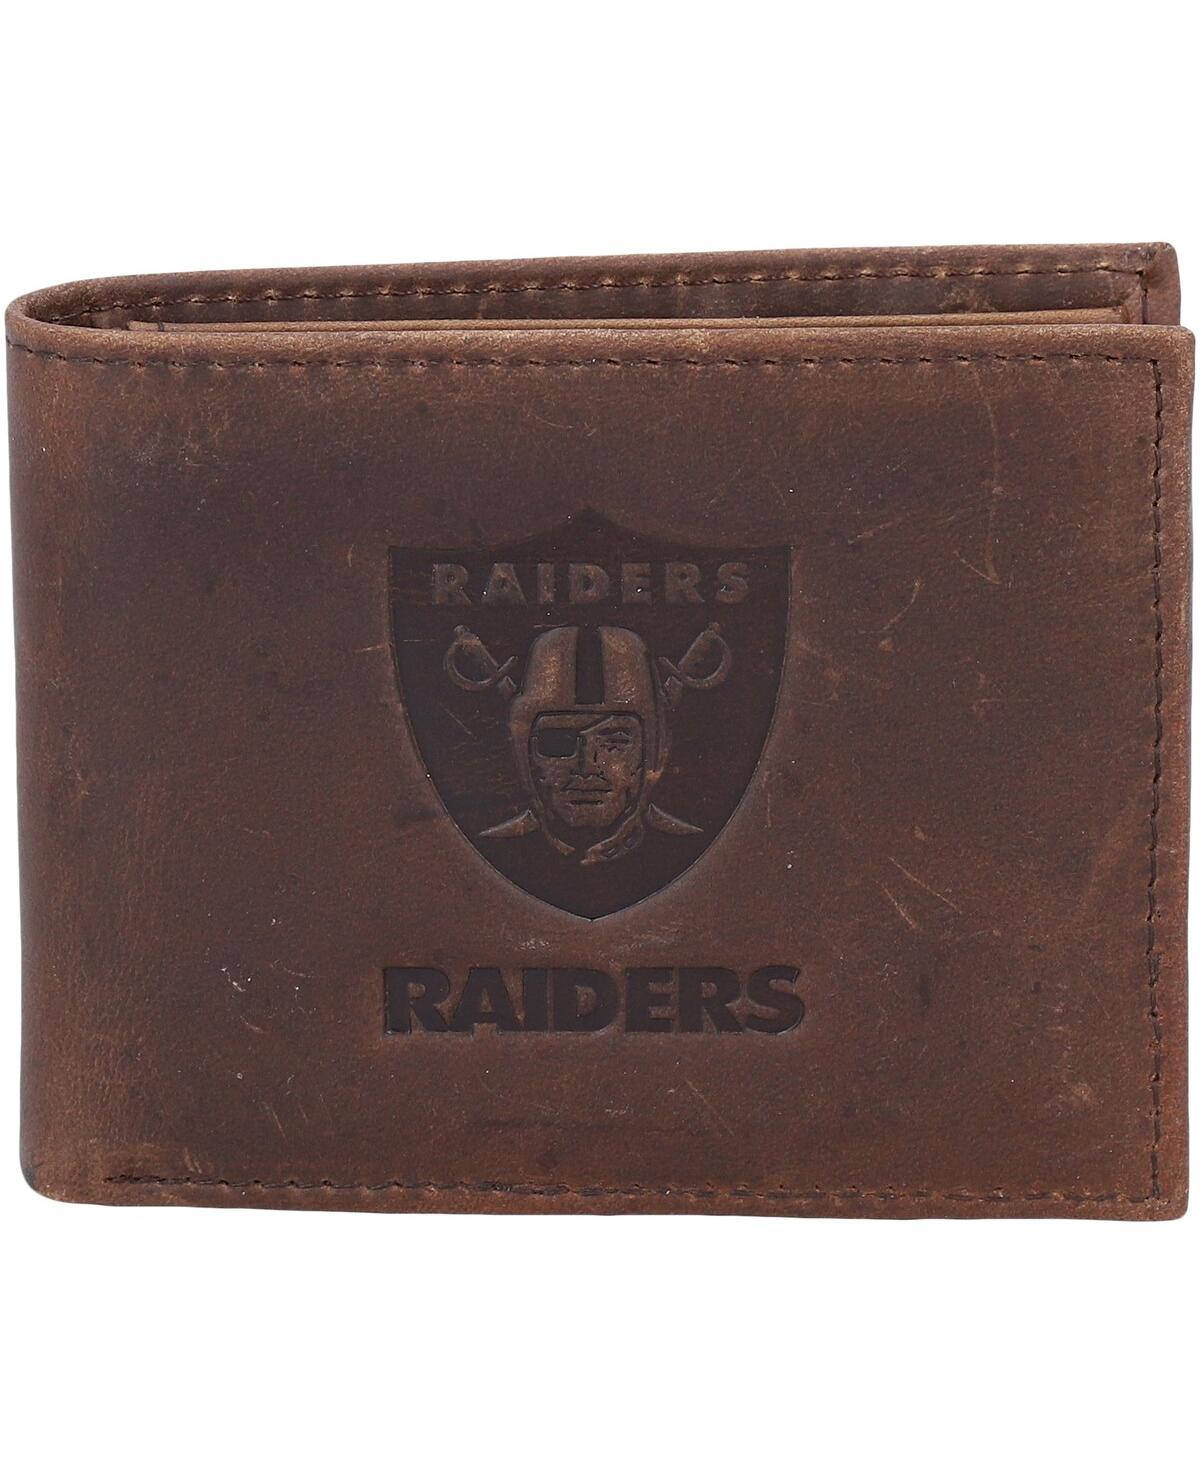 Shop Evergreen Enterprises Men's Brown Las Vegas Raiders Bifold Leather Wallet